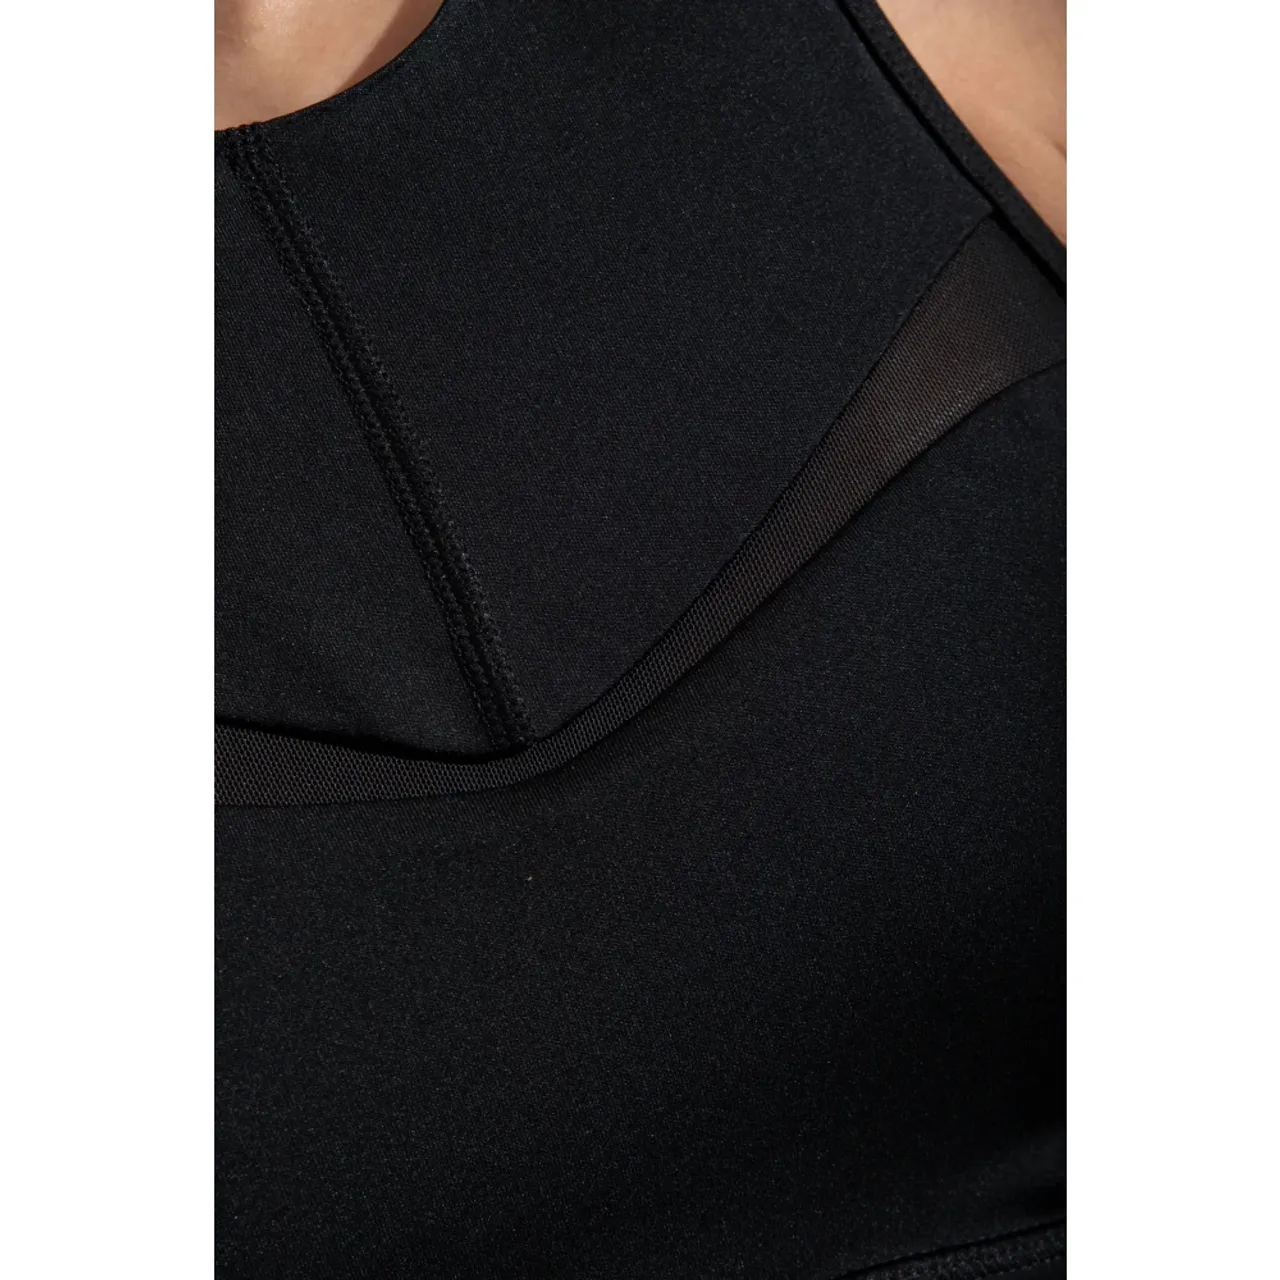 Adidas by Stella McCartney , Cropped tank top ,Black female, Sizes: